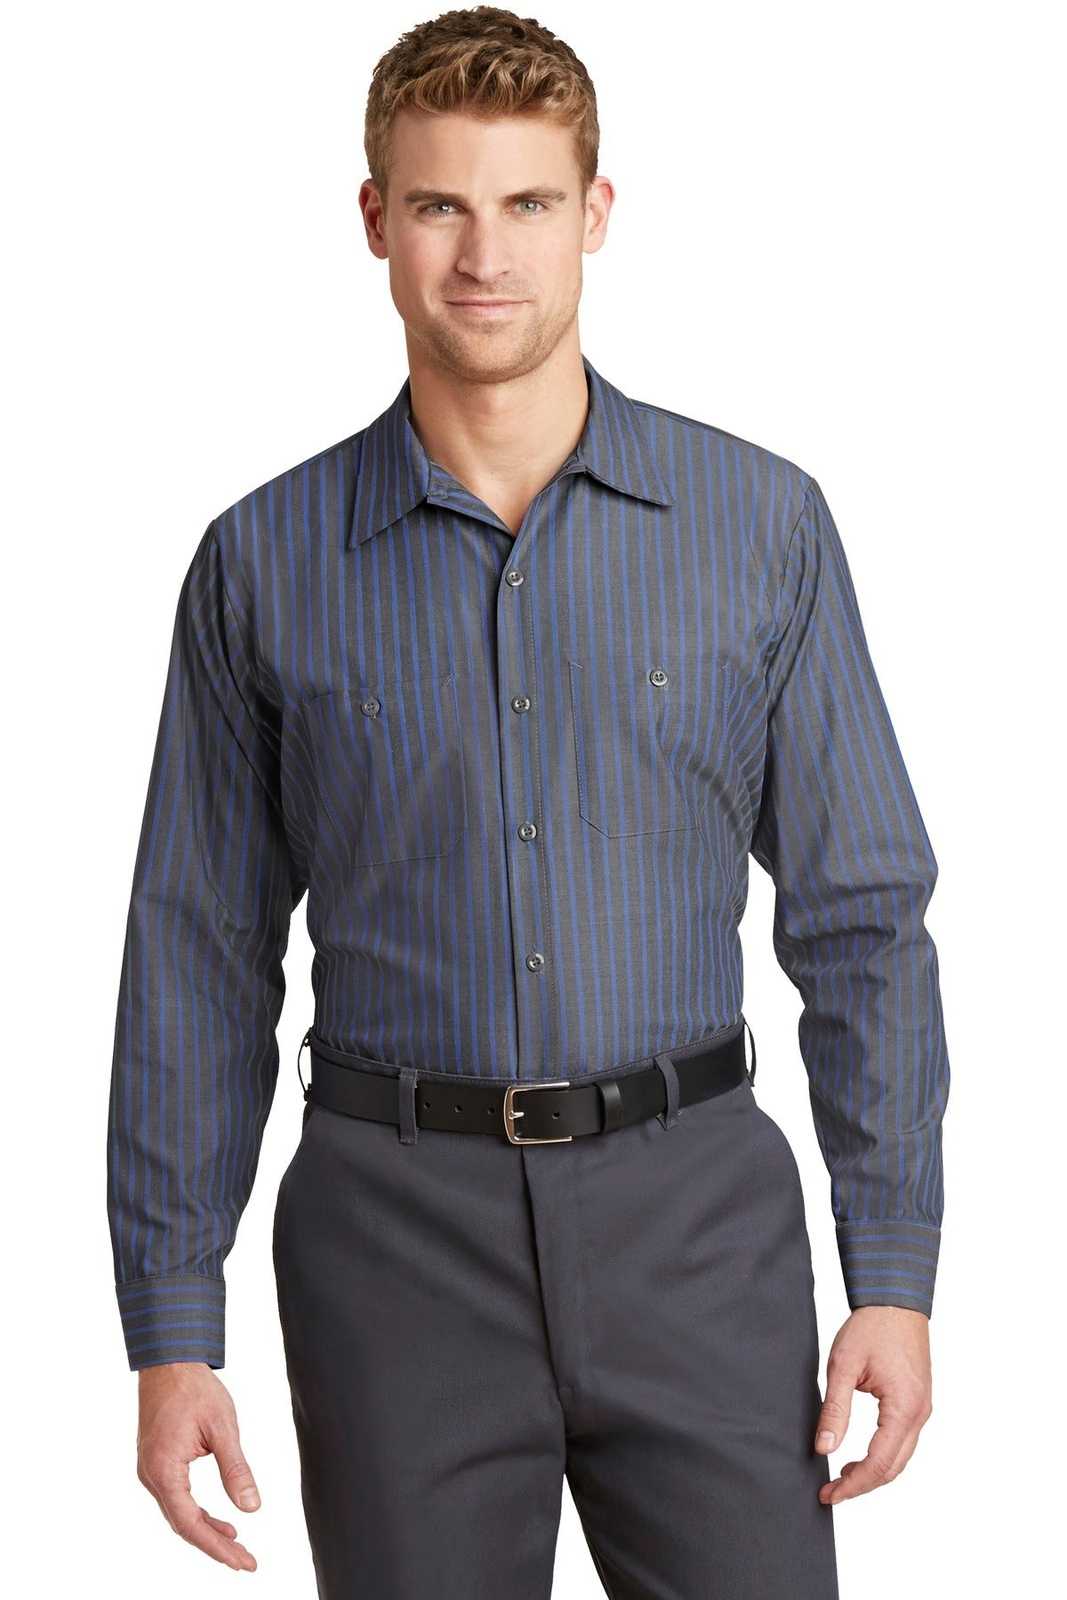 Red Kap CS10 Long Sleeve Striped Industrial Work Shirt - Gray/ Blue - HIT a Double - 1